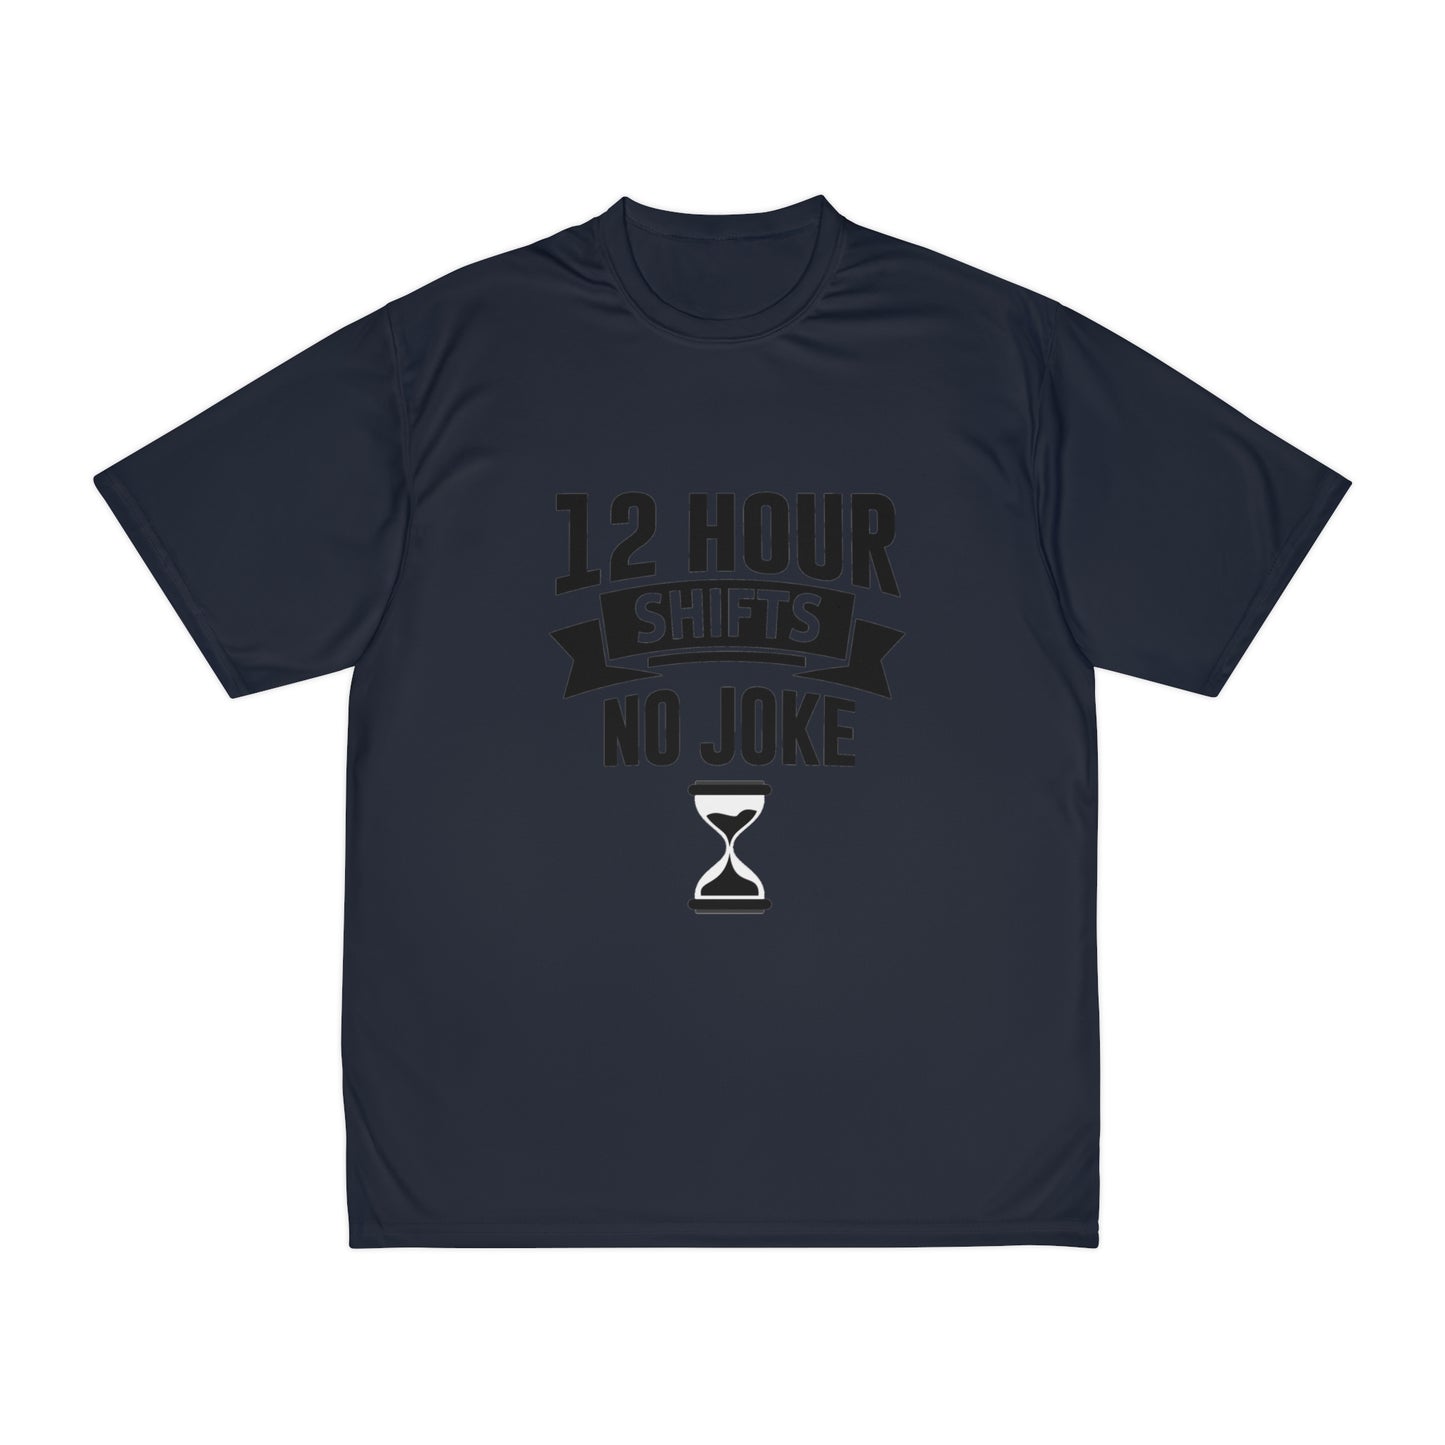 12 Hour Shifts No Joke Performance T-Shirt, Doctor shirts, Doctor gift ideas, New Doctor shirt, Future doctor shirt, gift for doctors